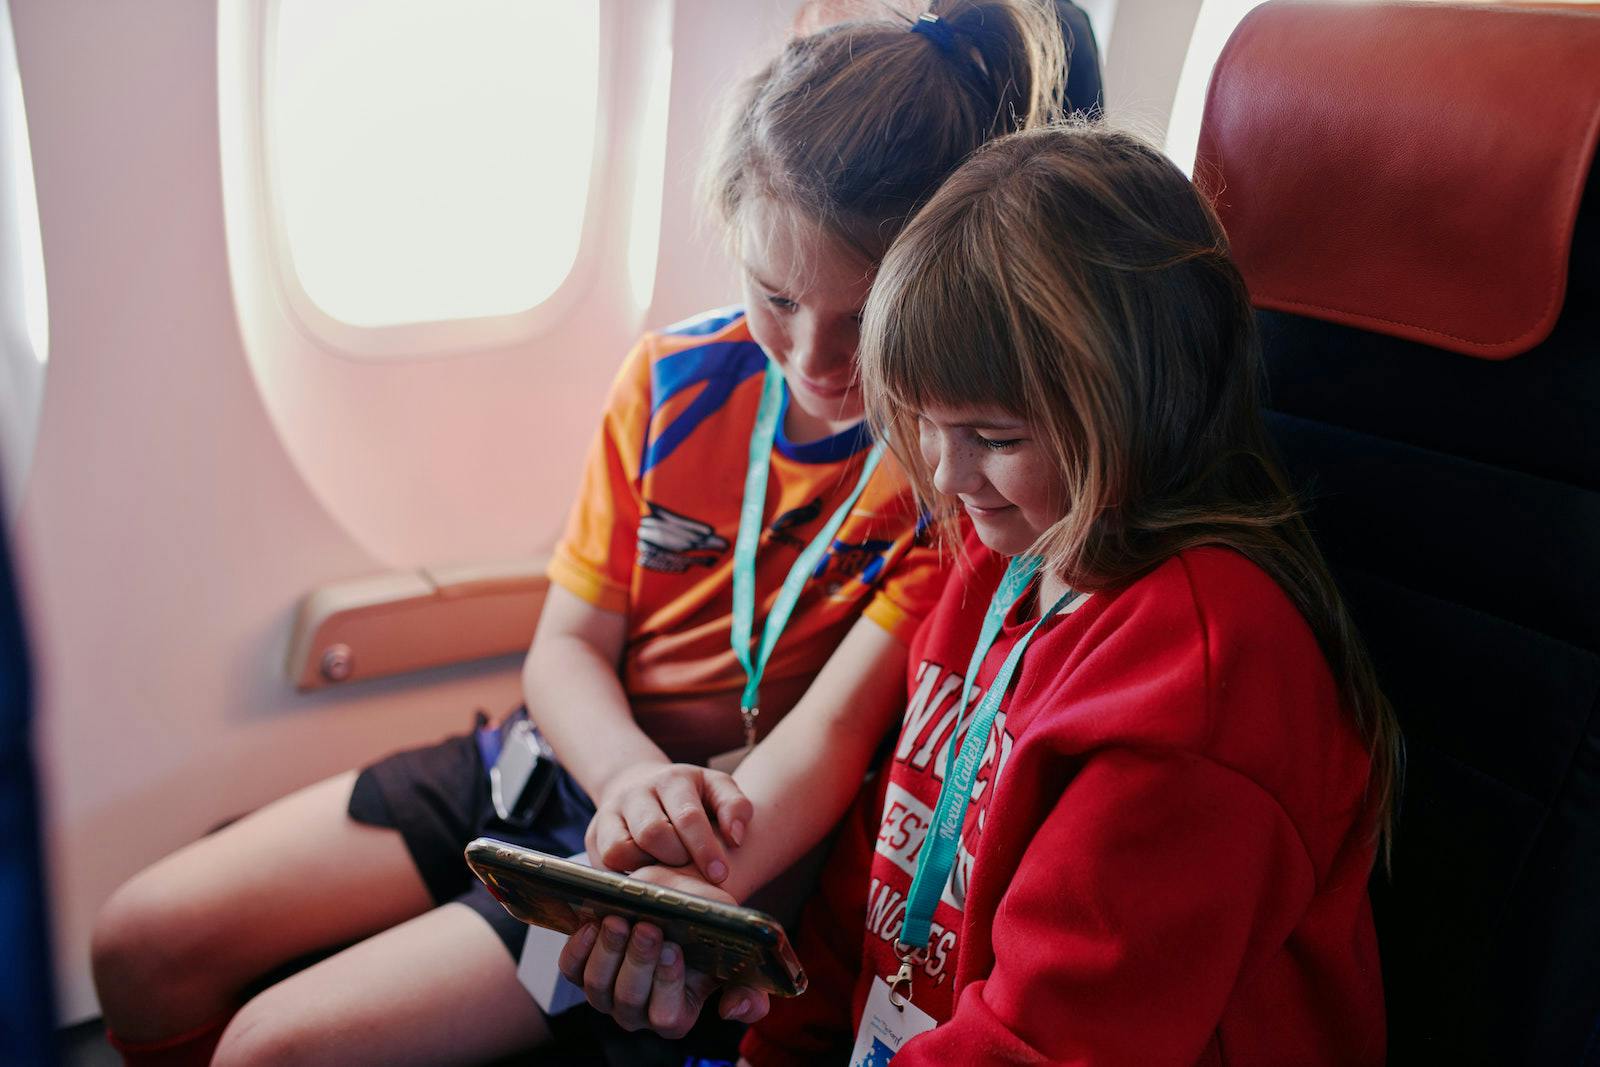 Nexus Airlines kids fly free